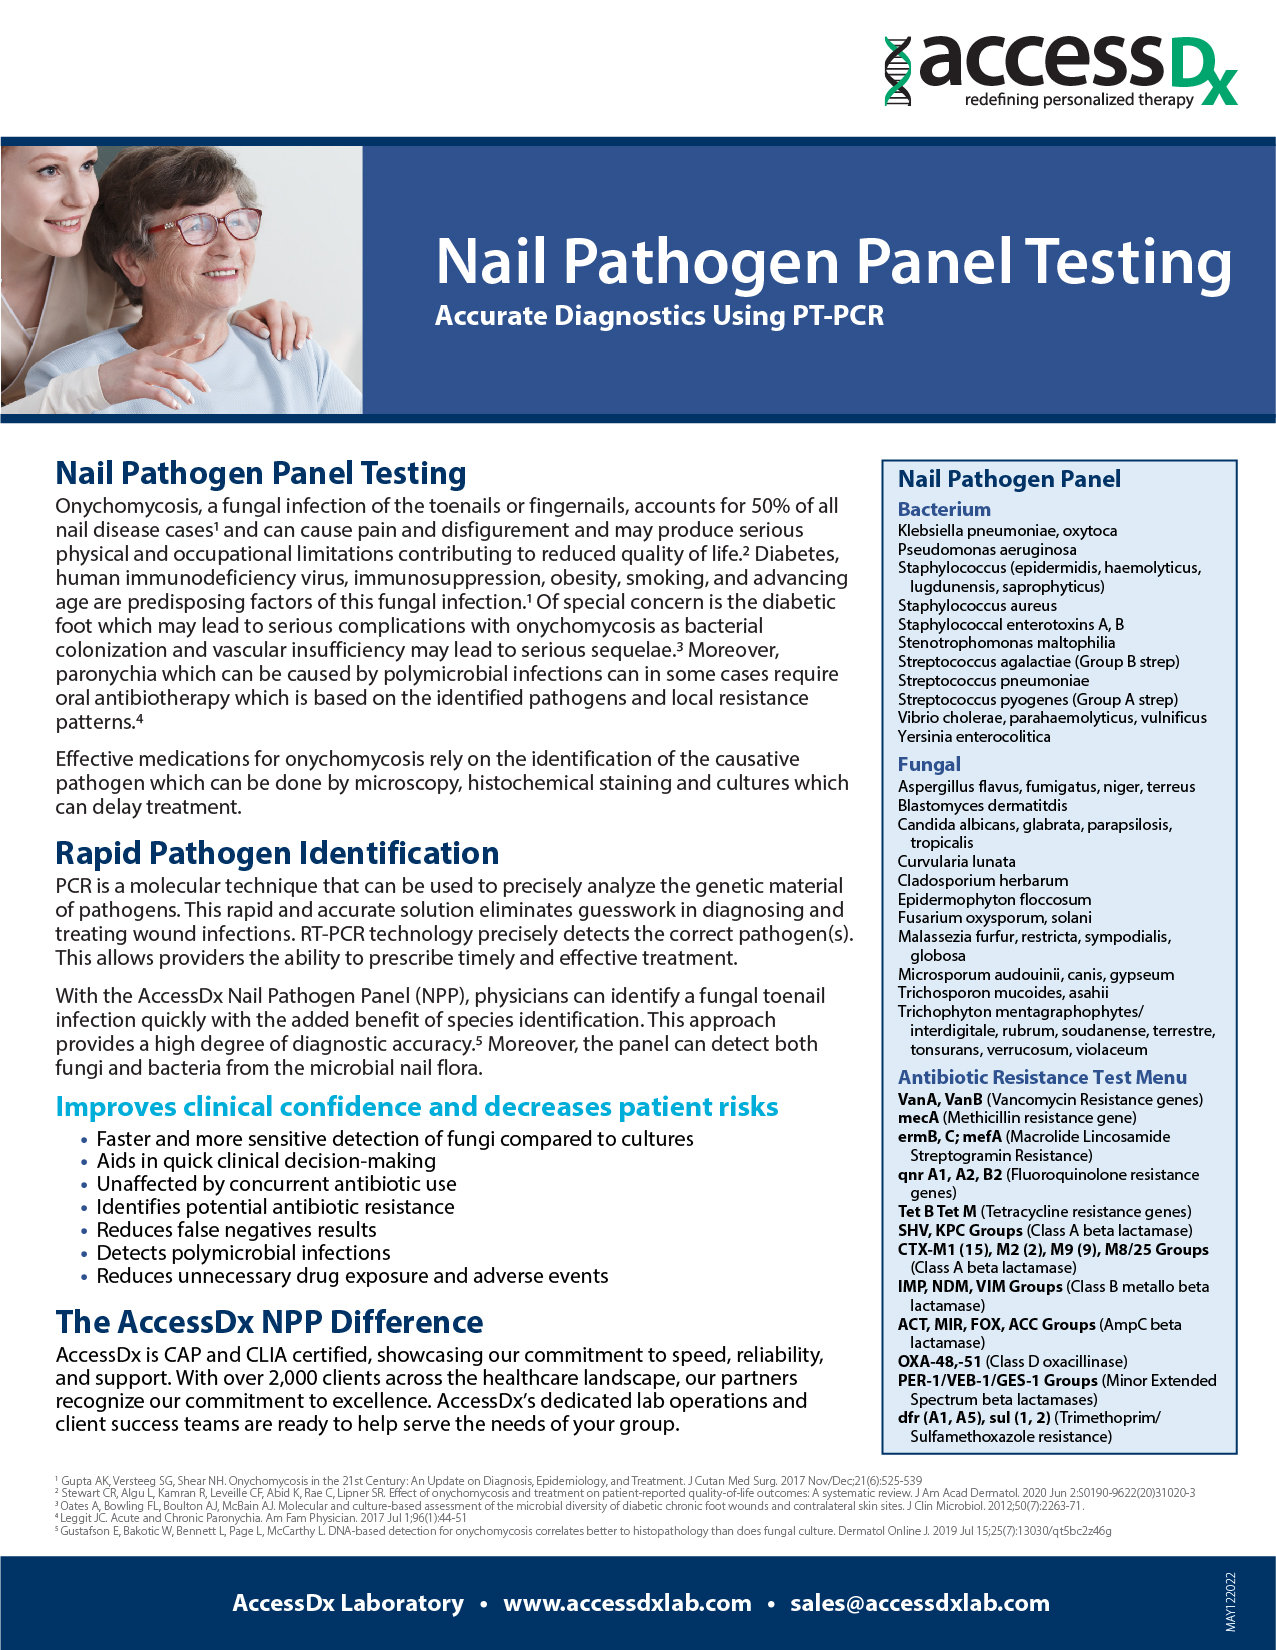 Nail Pathogen cover